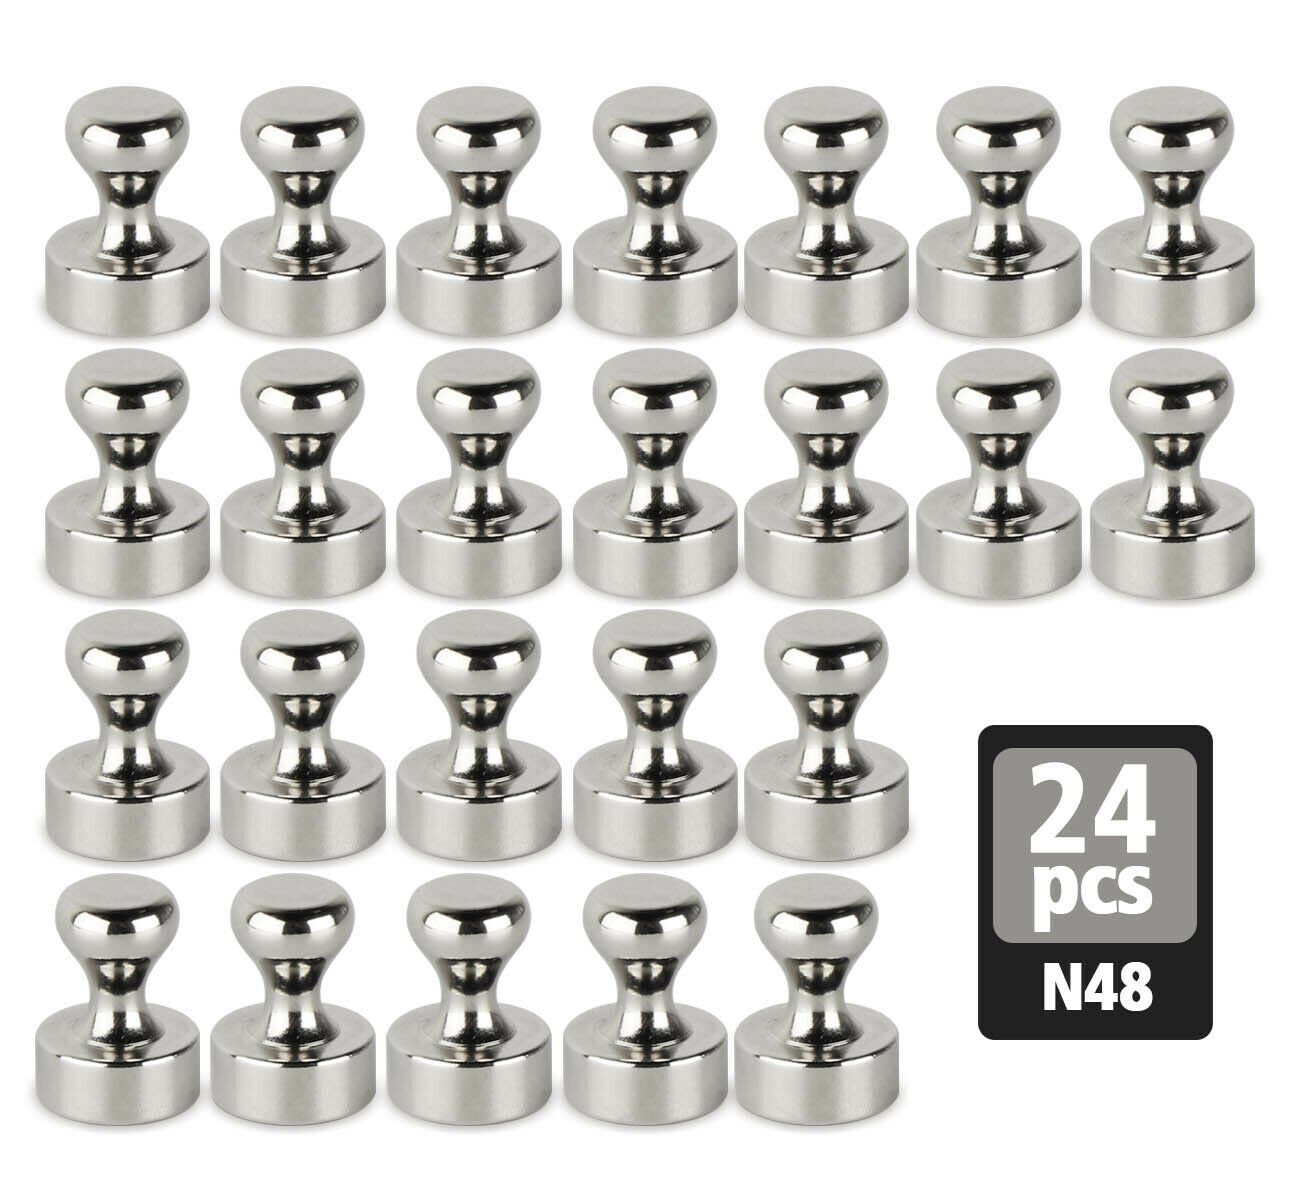 Magnete Set 12 teilig für Kühlschrank Büro Tafel Pinnwand Bunt Rund 2,8 x 0,9 cm 